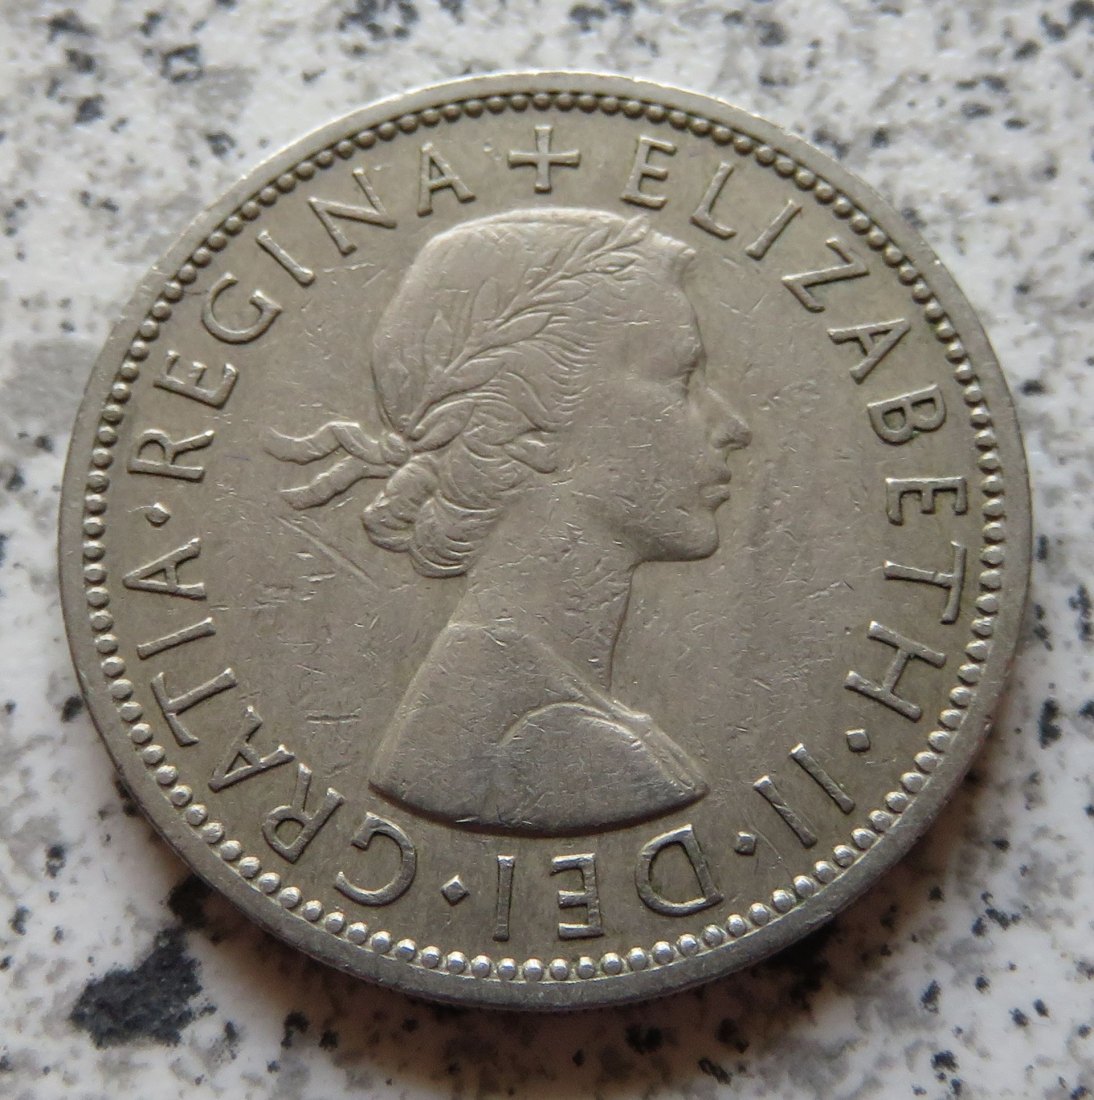  Großbritannien 2 Shillings 1956   